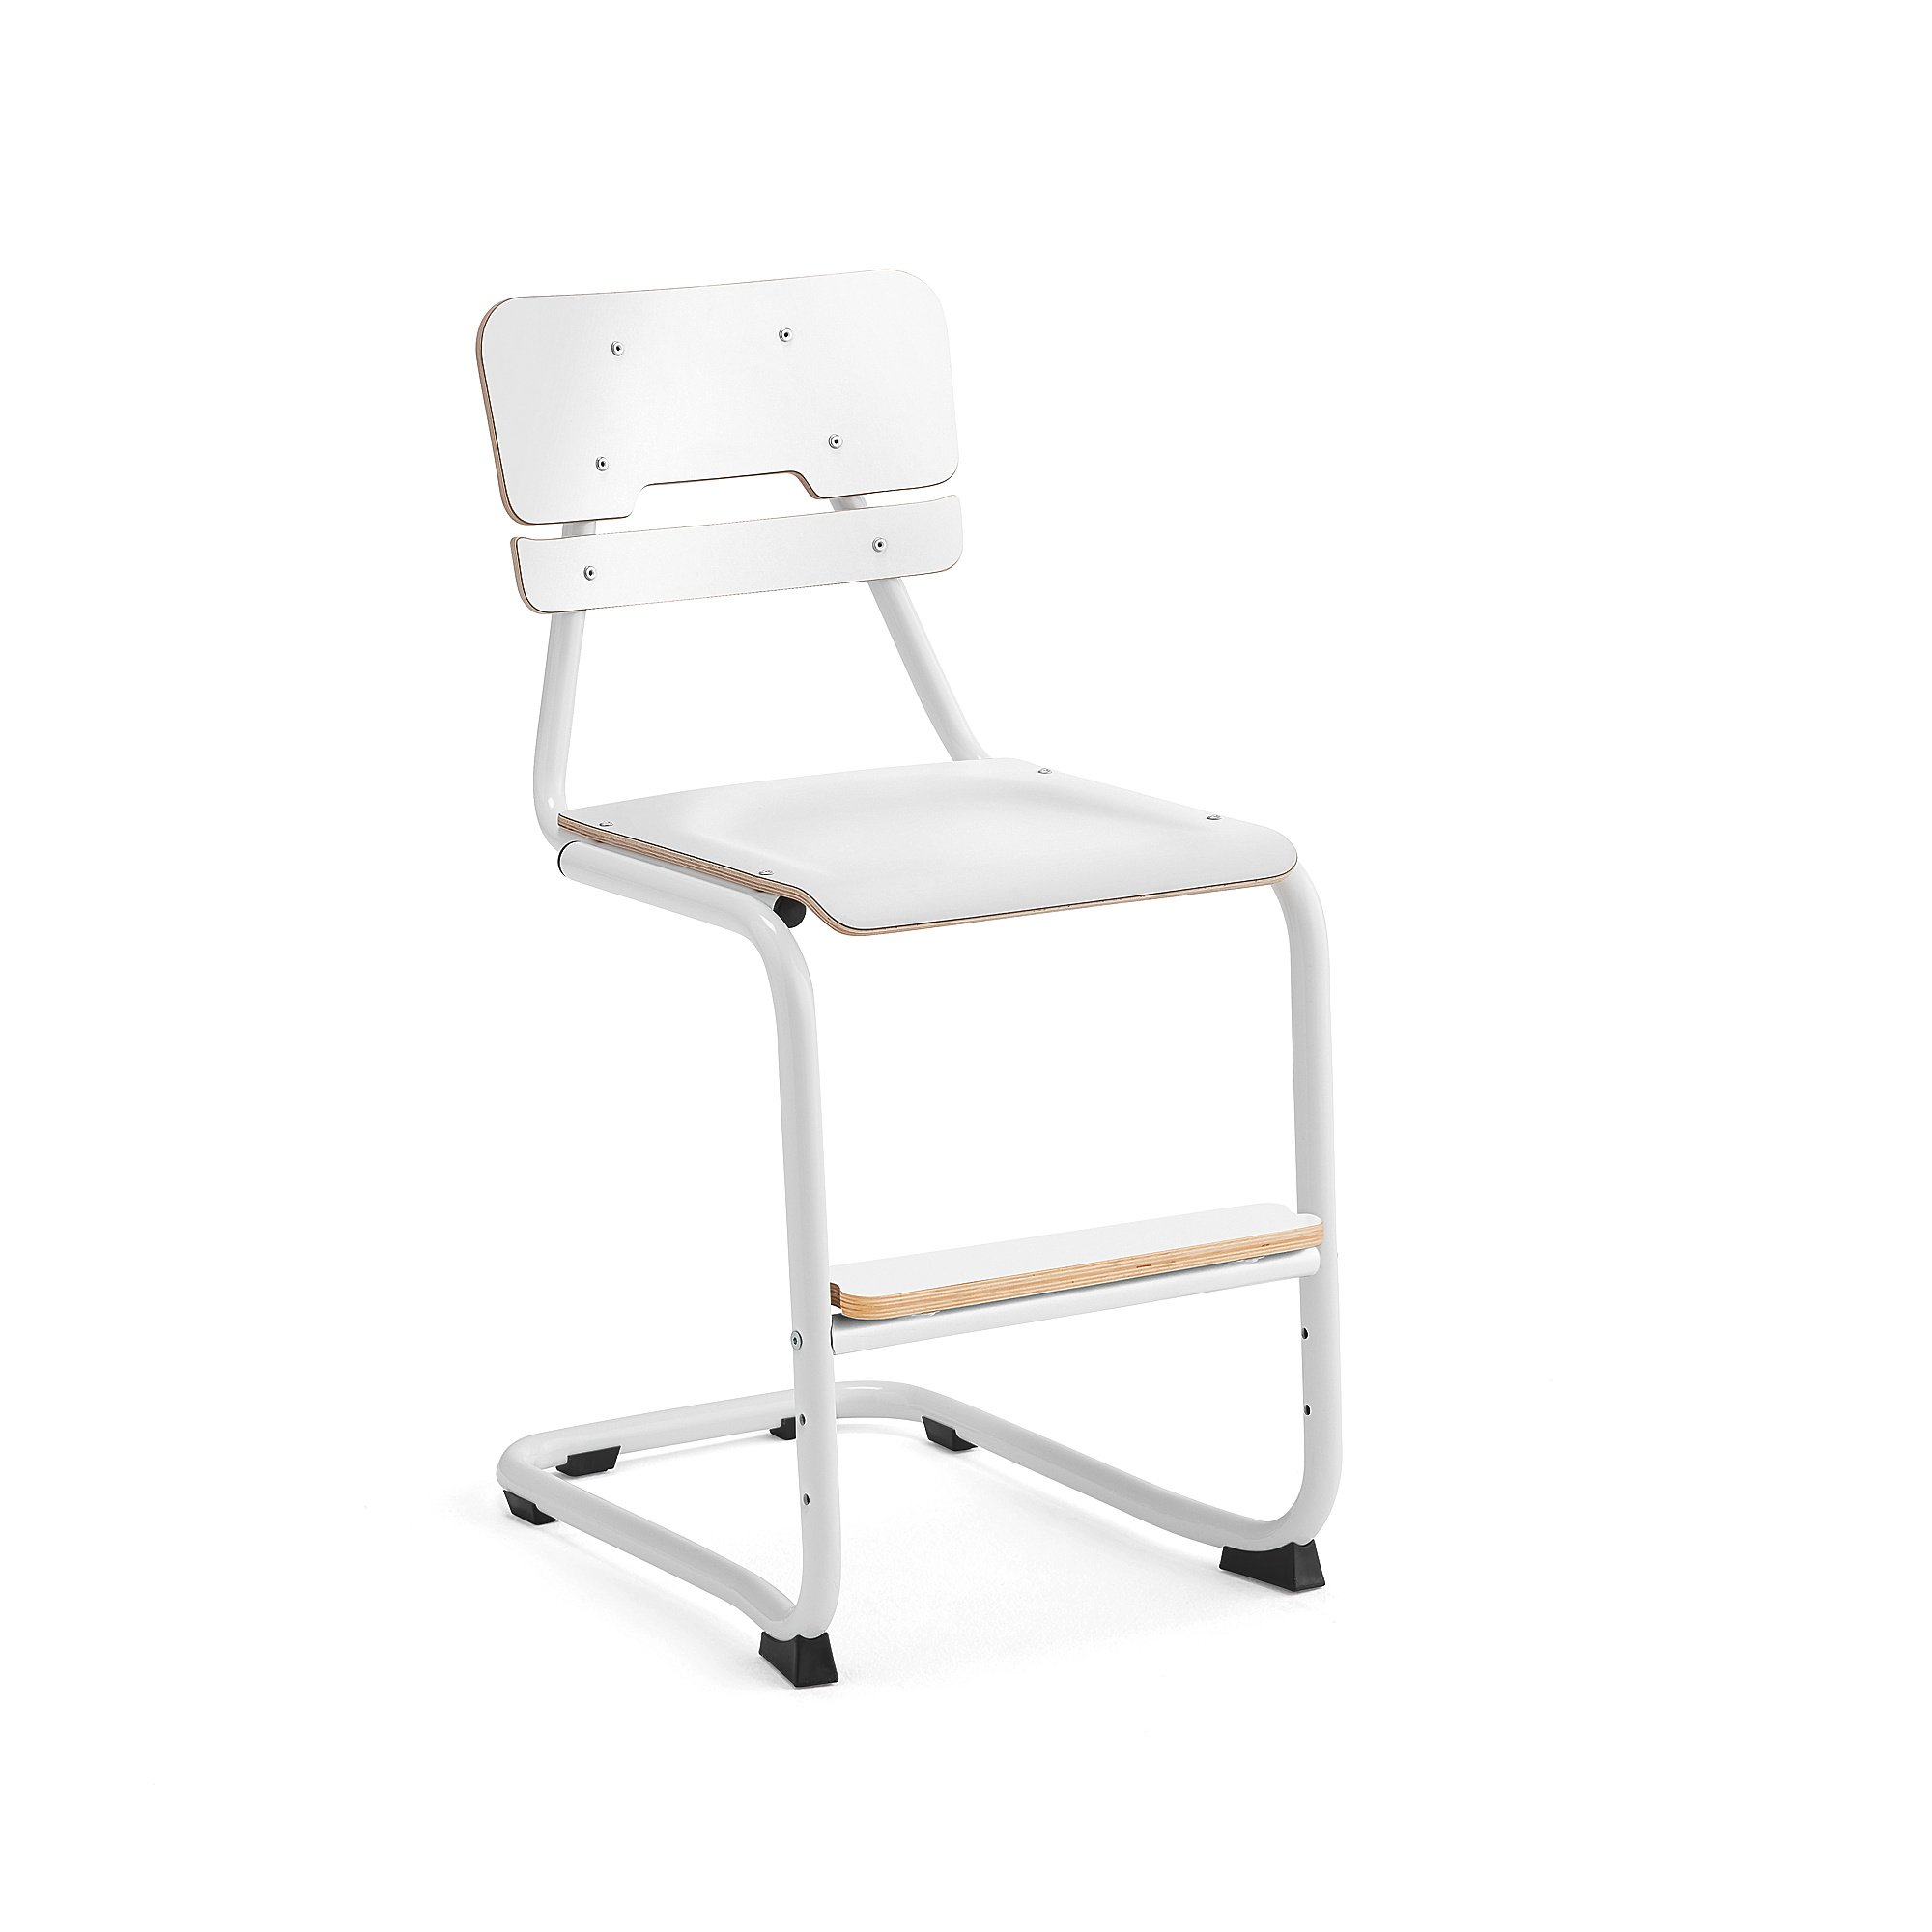 Školní židle LEGERE III, výška 500 mm, bílá, bílá